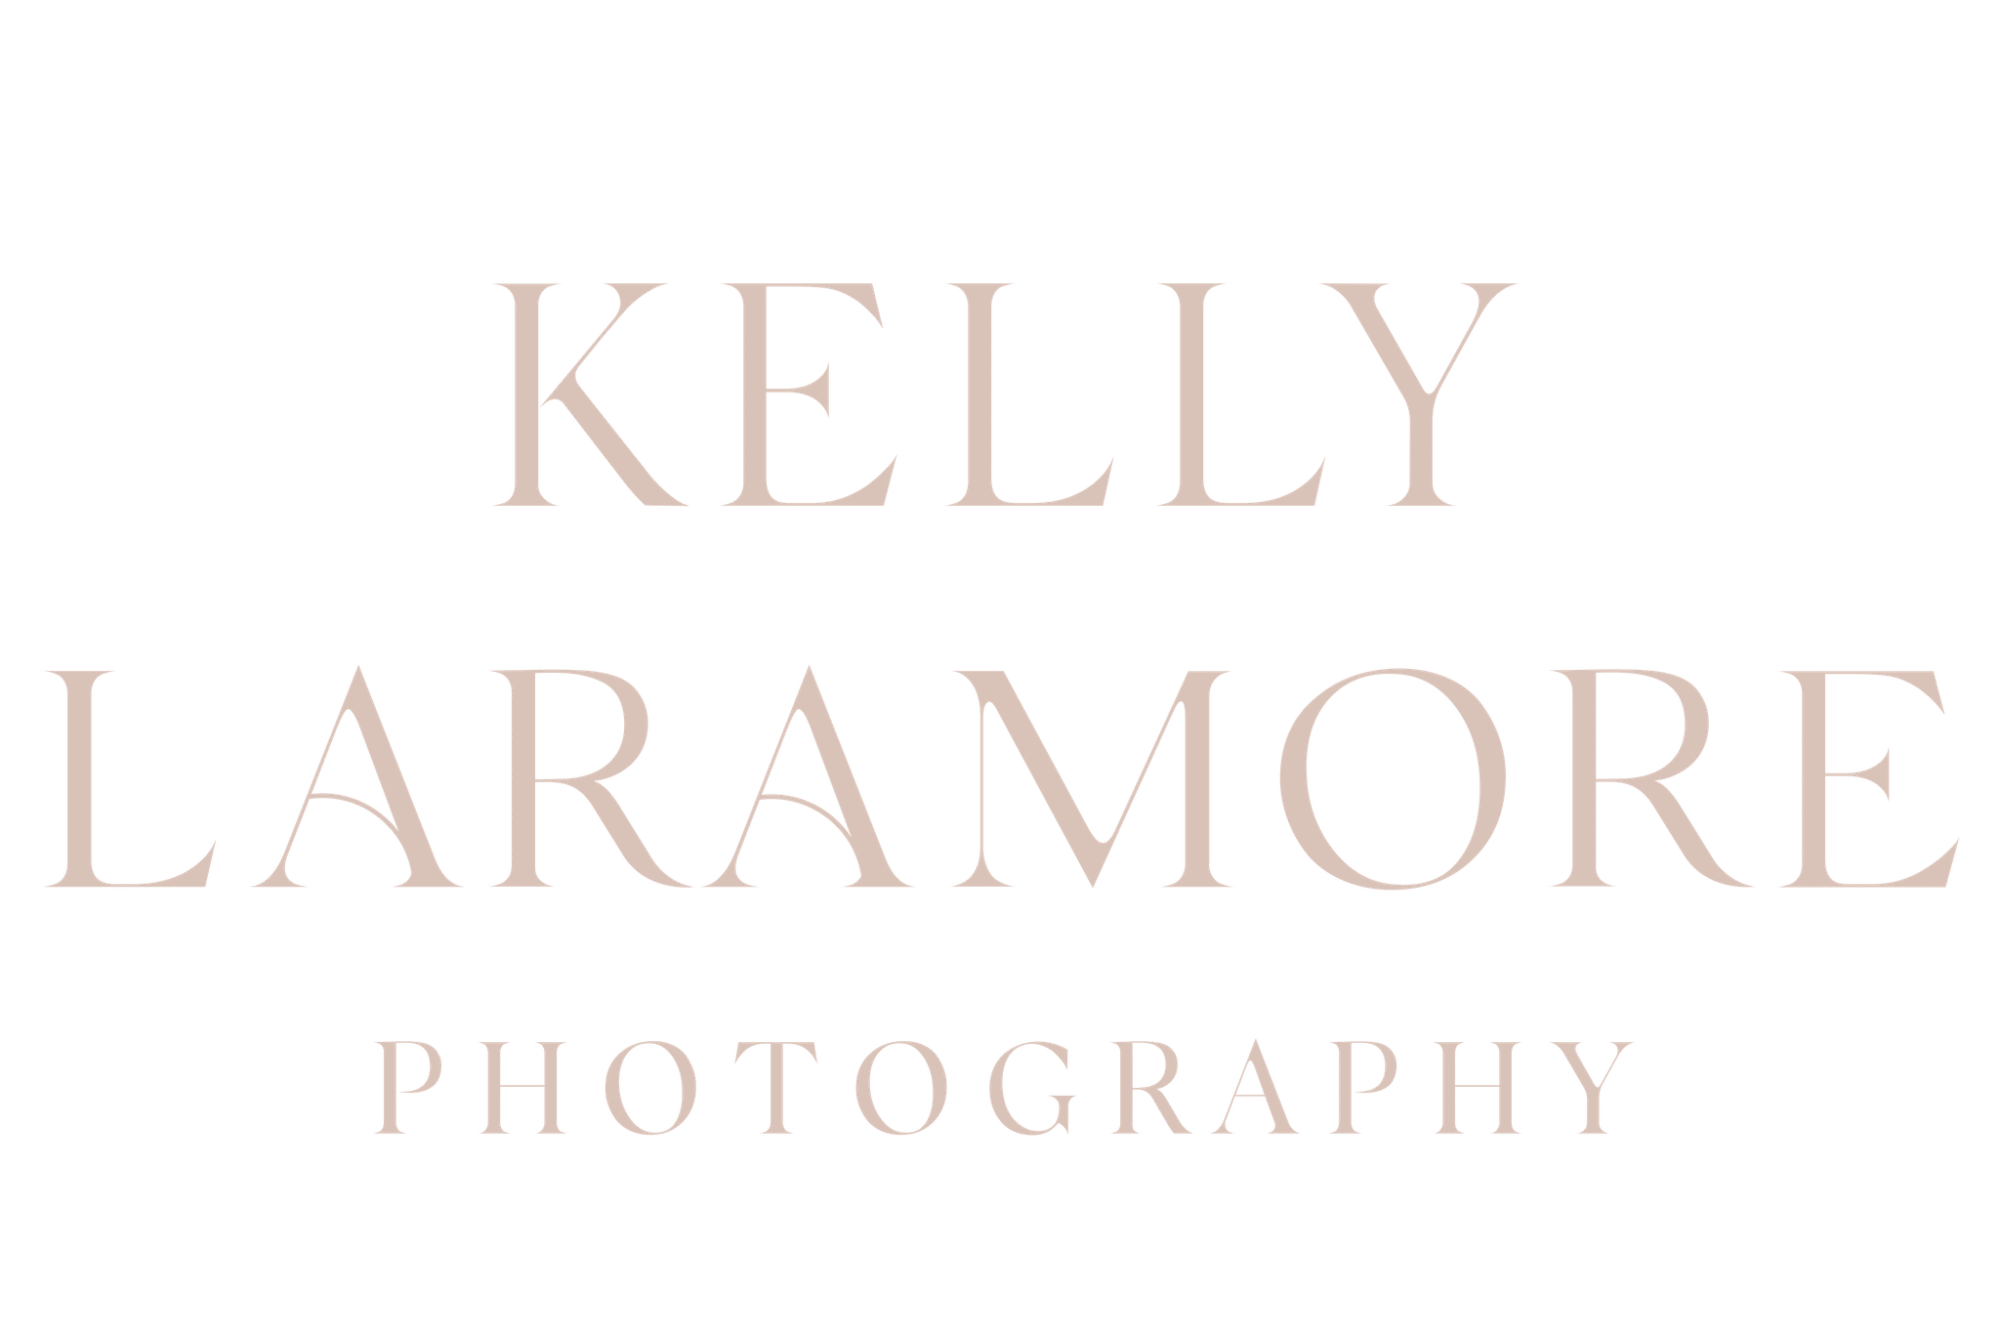 Kelly Laramore Photography logo